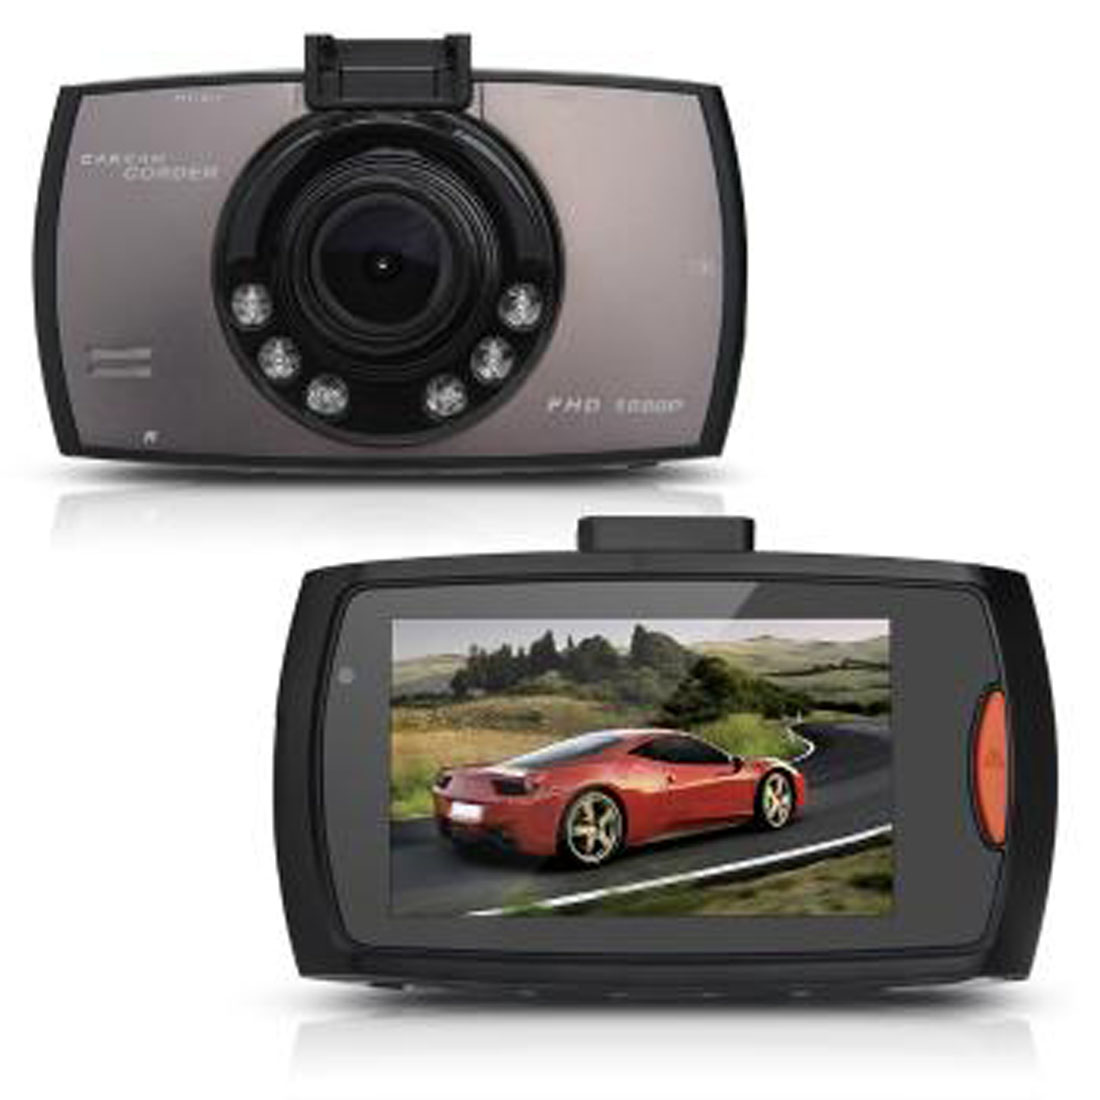 New 2.7inch 170 Degree Wide Angle Lens Car Dash DVR Camera Video Camcorder Recorder 1080p full HD G-sensor Night Vision novatek